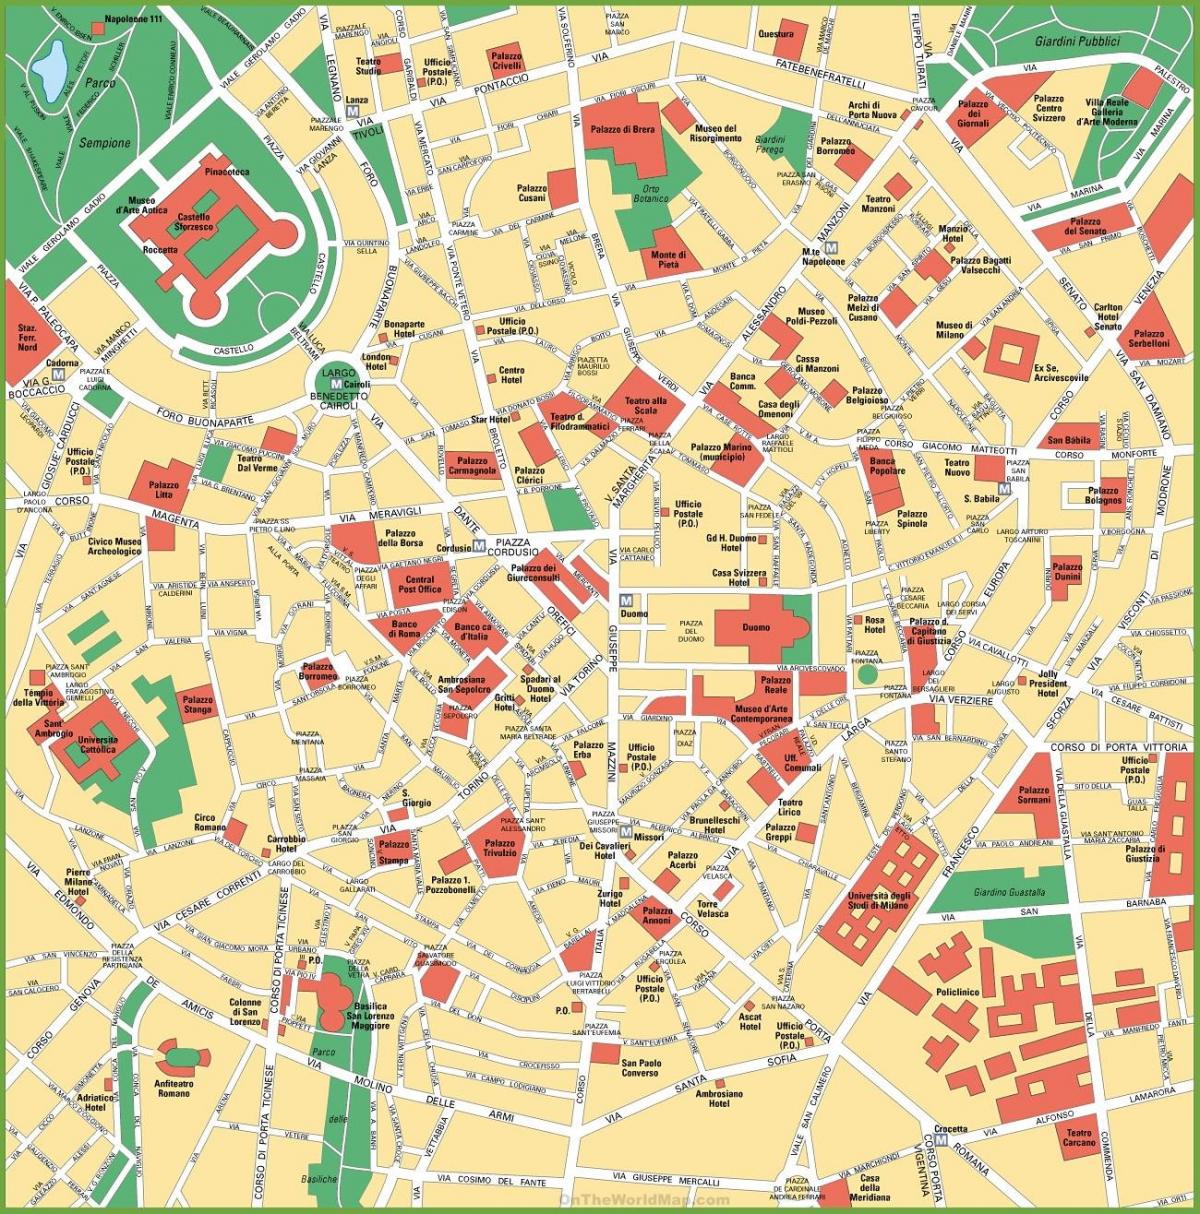 milano city center خريطة